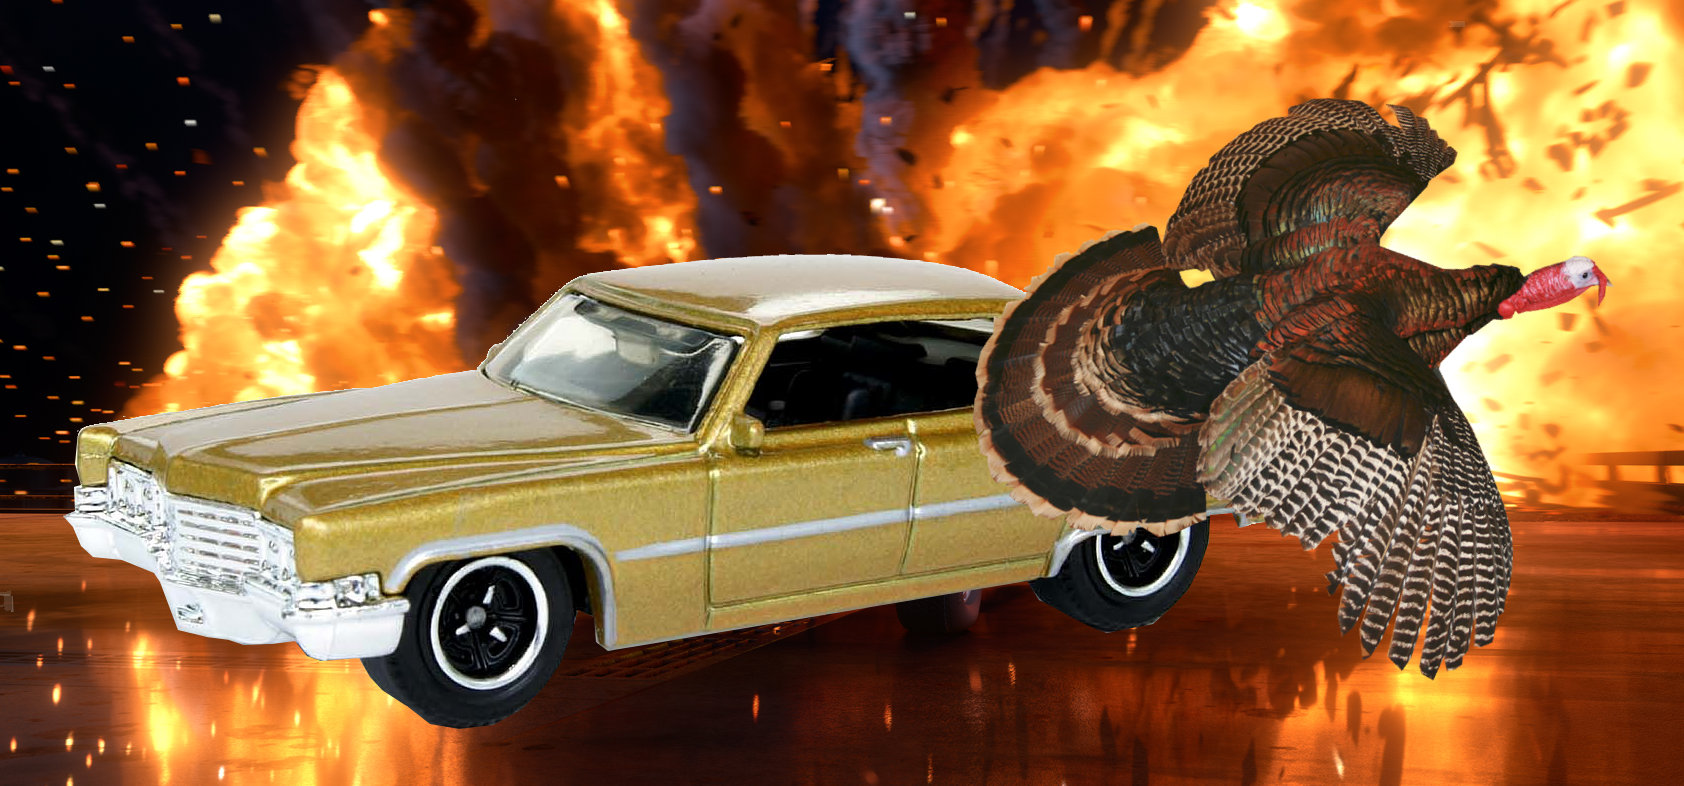 Herbert H Turkey and Exploding Car